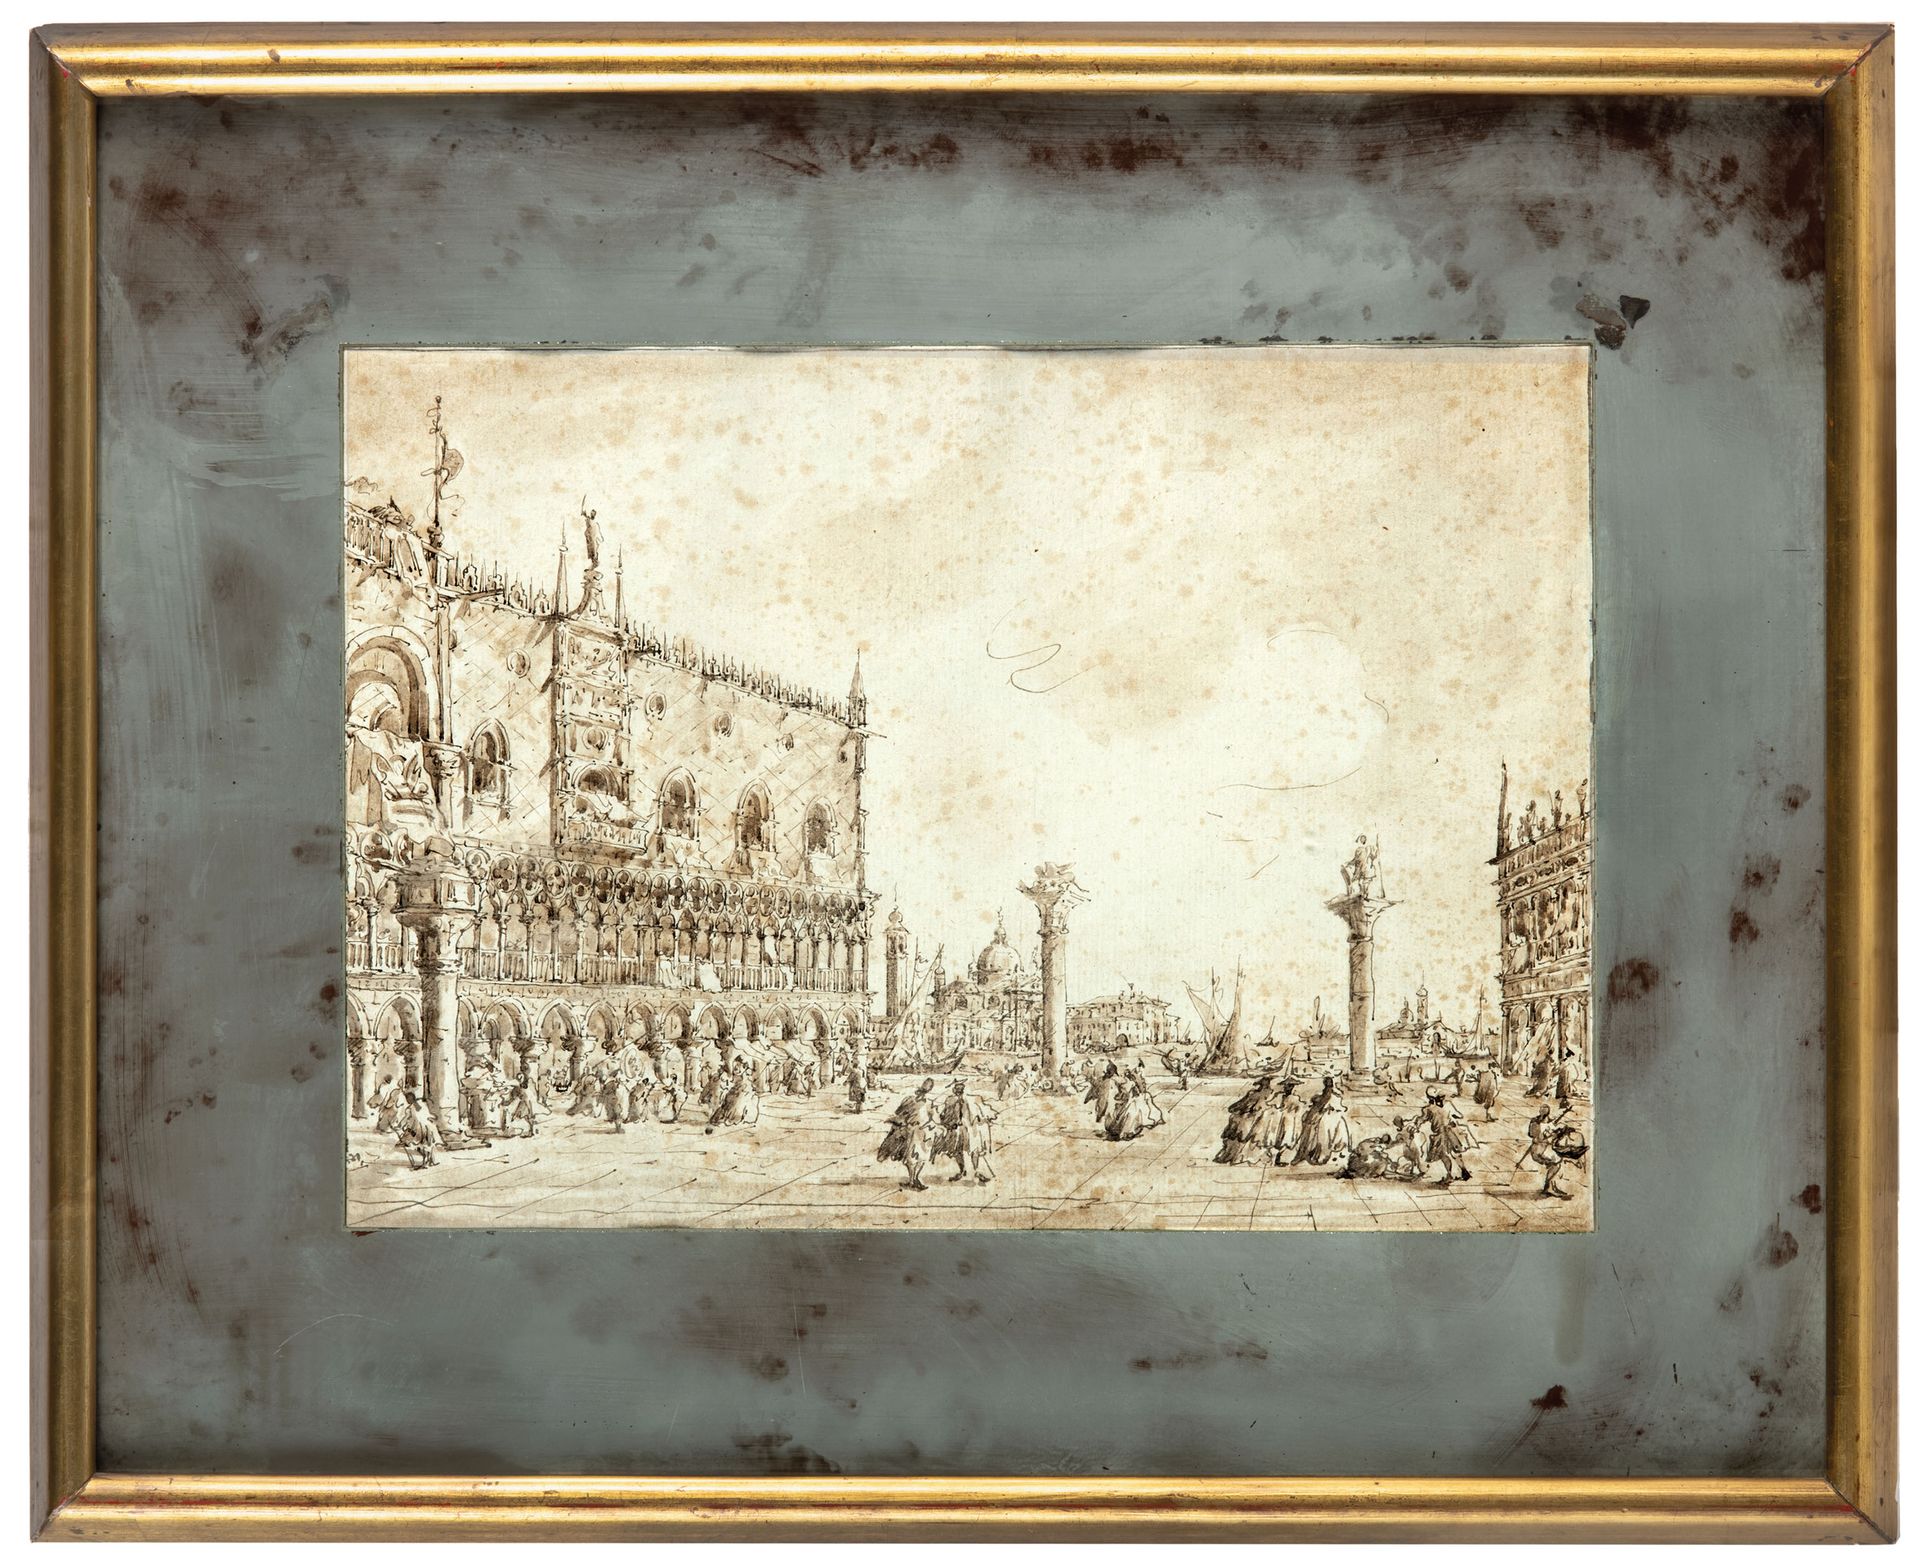 FRANCESCO GUARDI (maniera di) (Venise, 1712 - 1793)
Vue du Rialto
Chine sur papi&hellip;